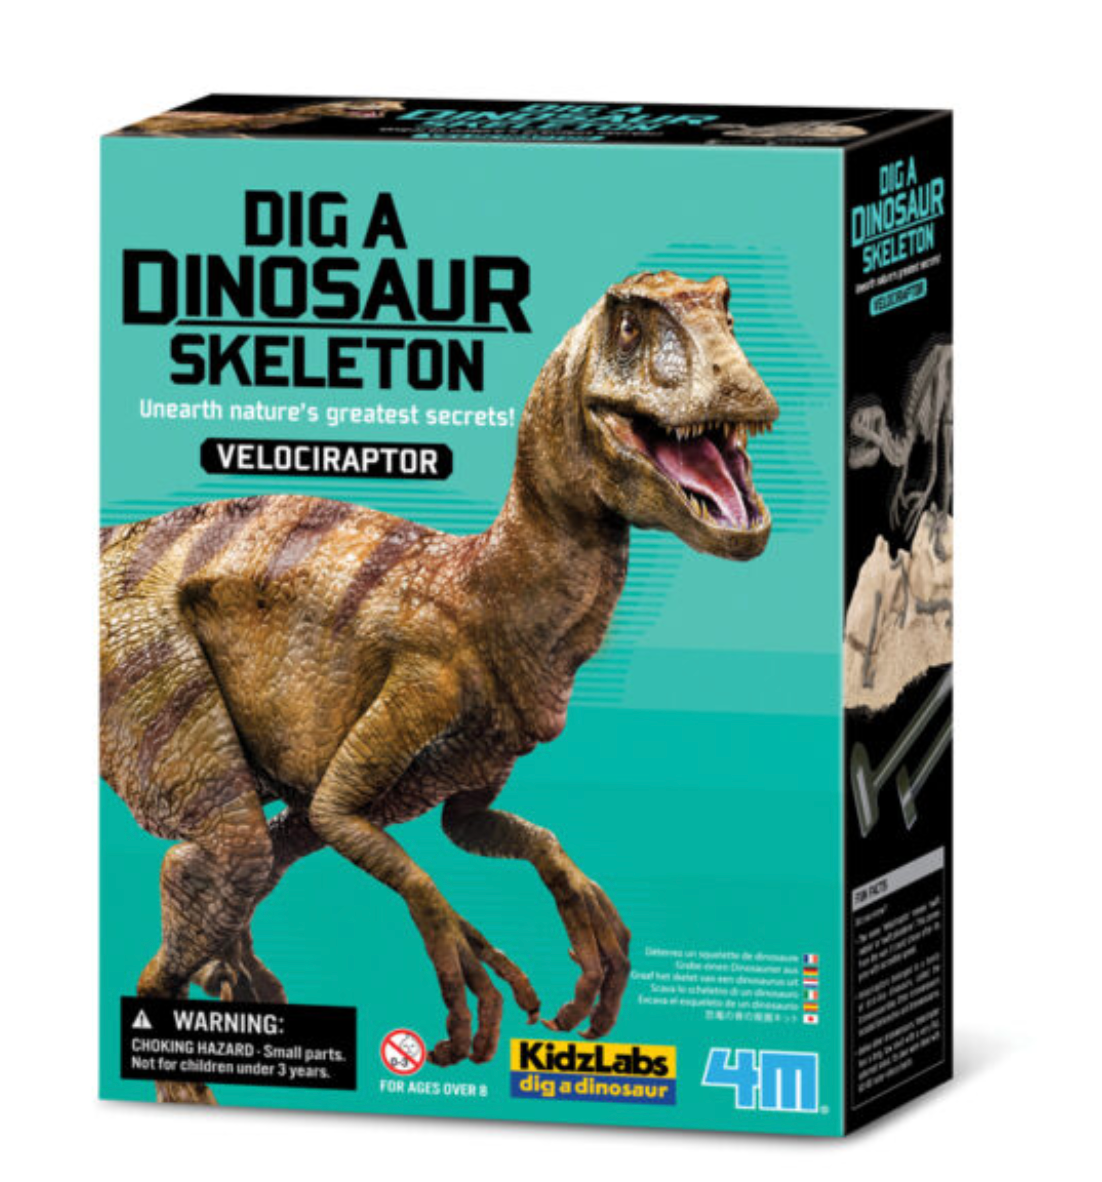 Dig a Dinosaur Skeleton - Velociraptor